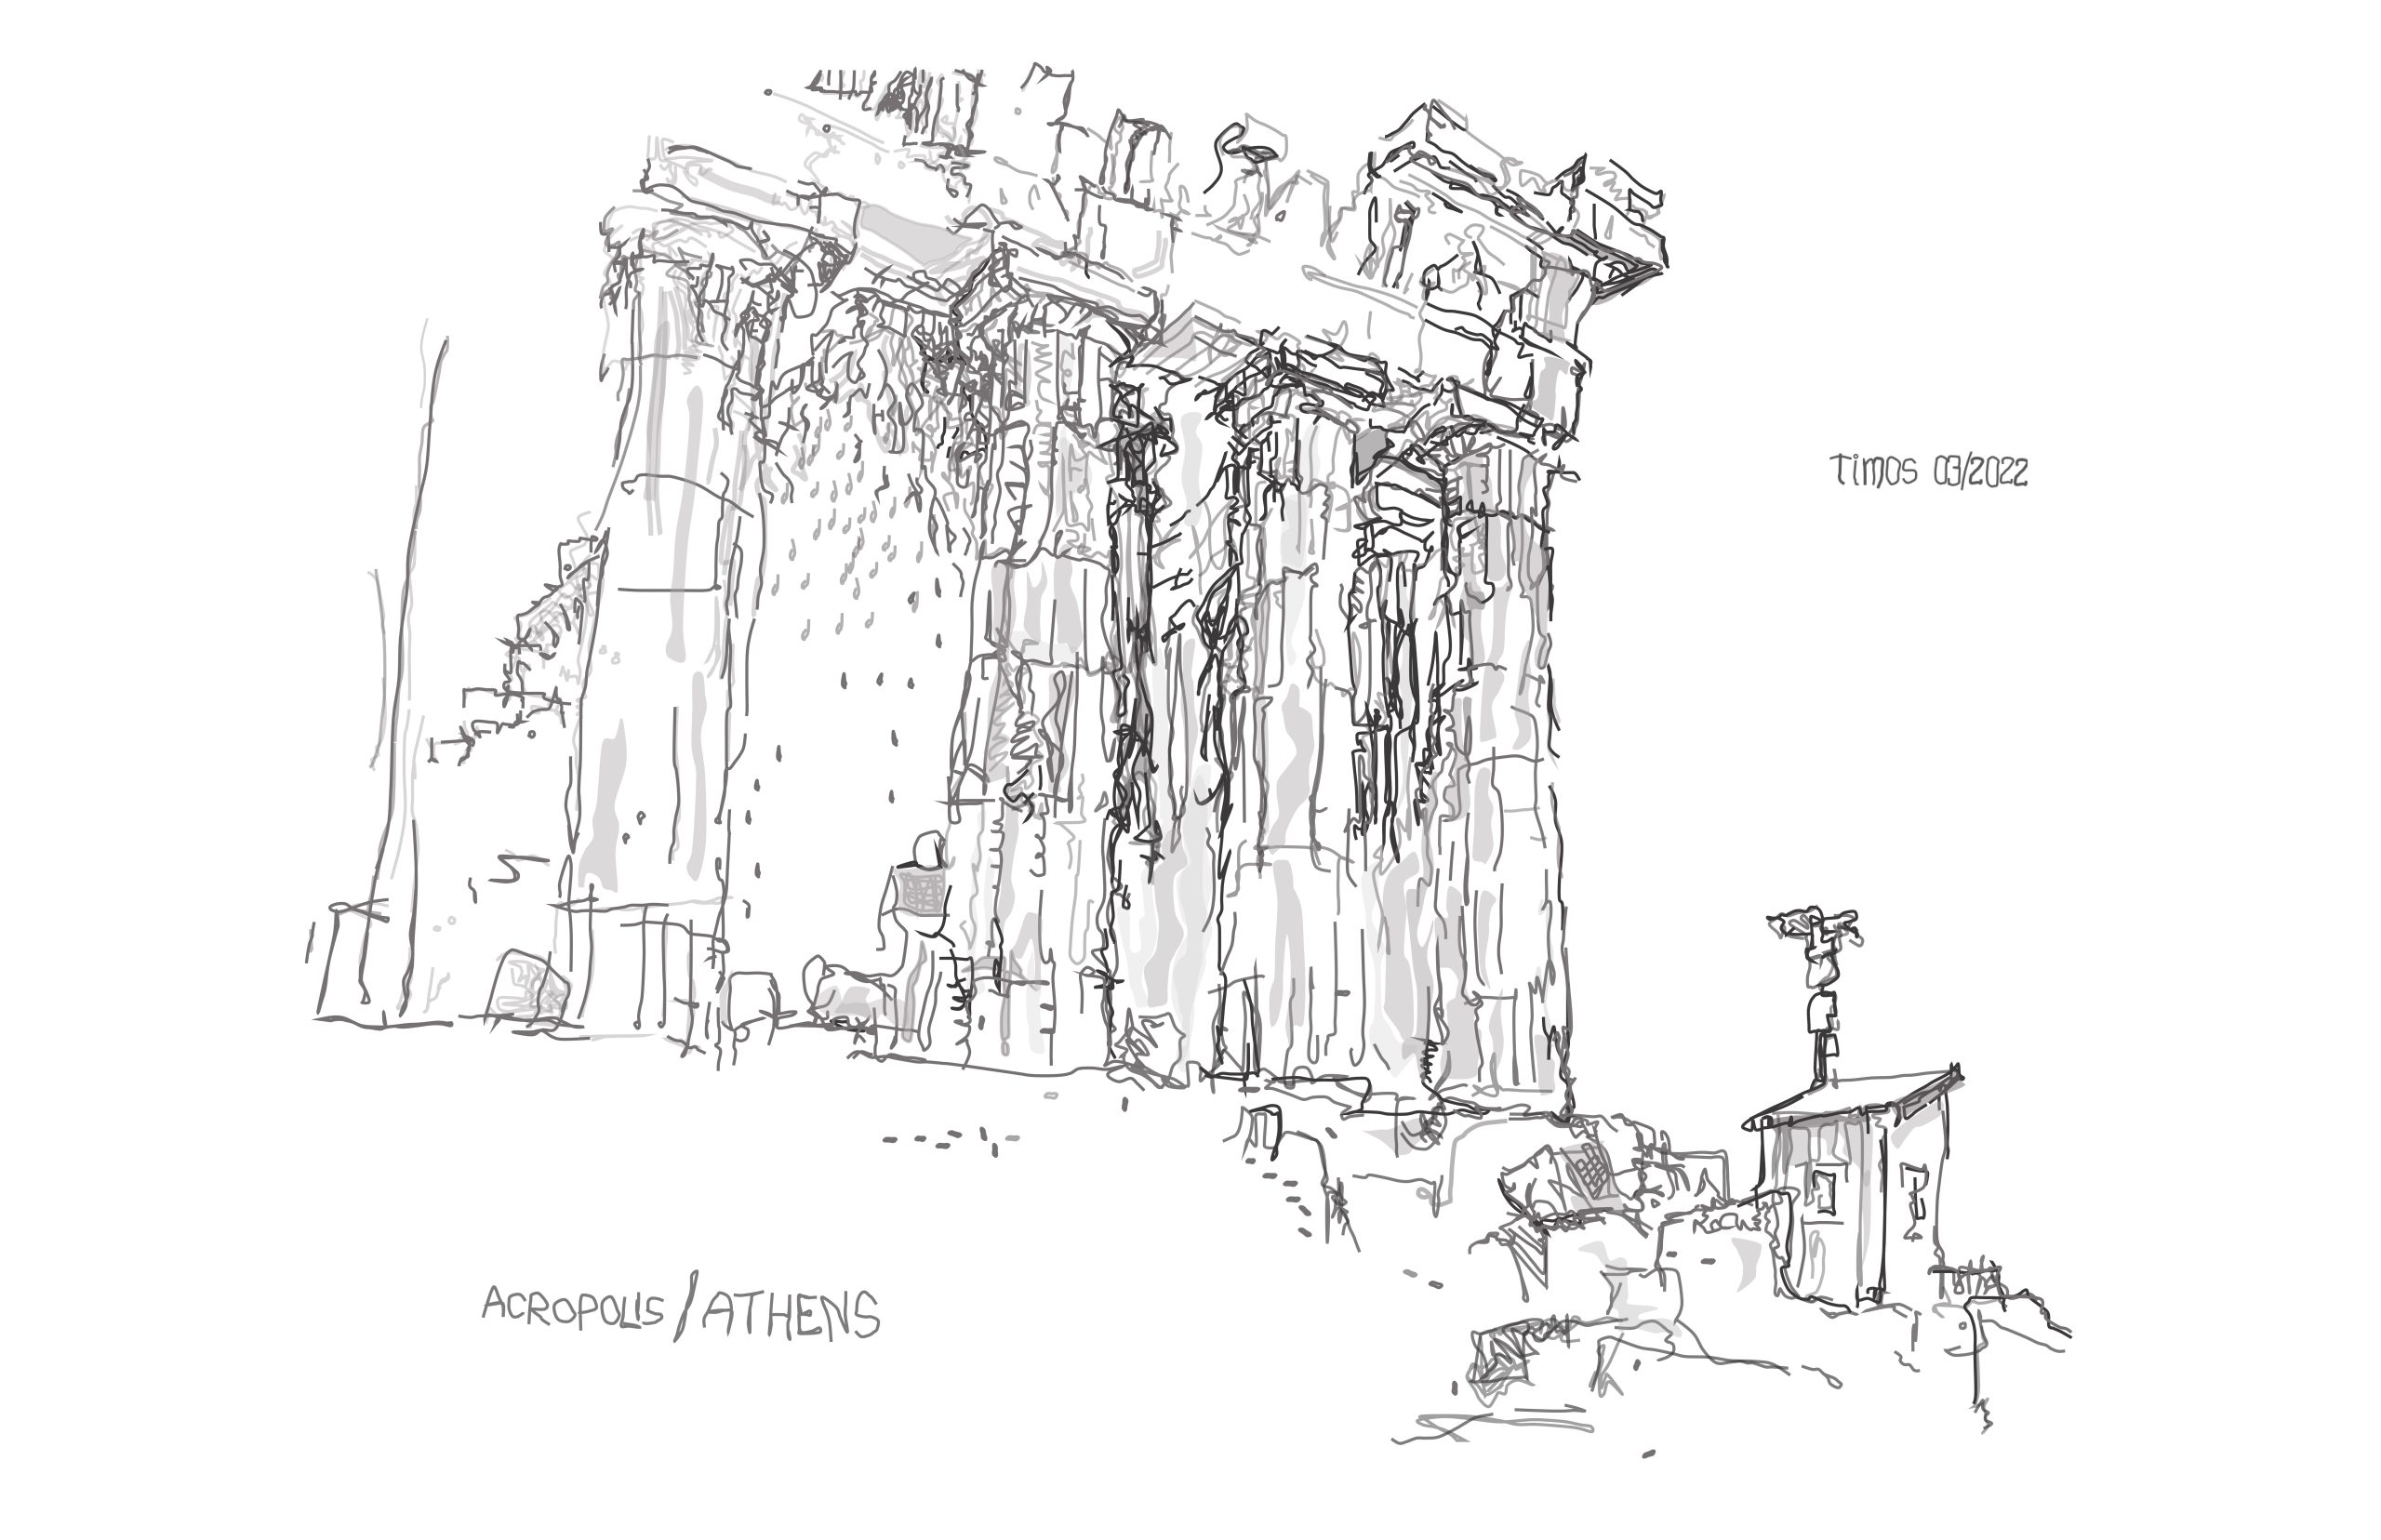 The Parthenon beauty